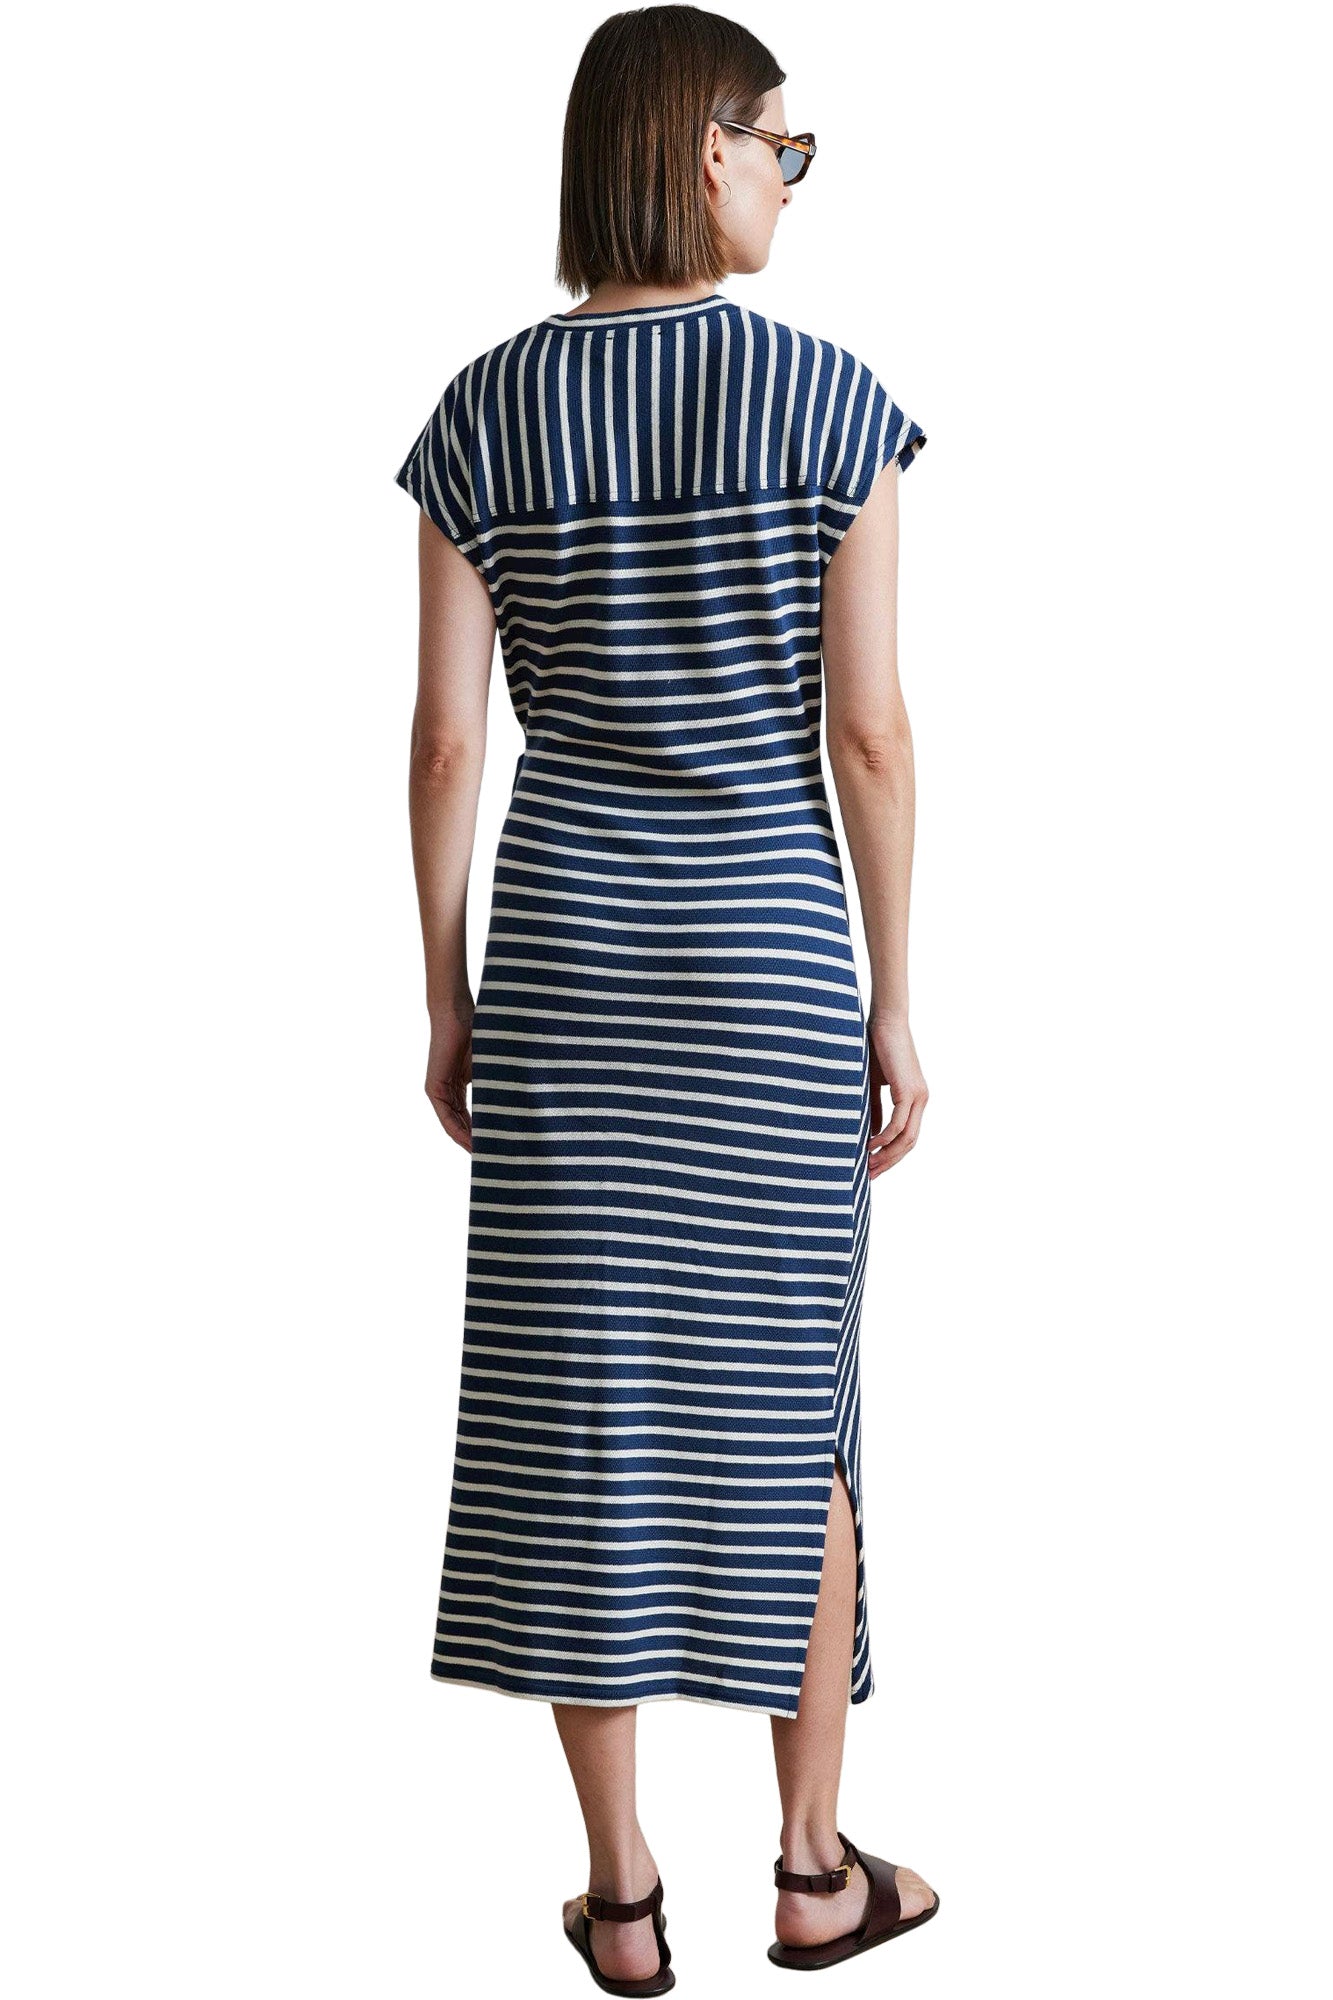 Apiece Apart Vanina Cinched Waist Dress in Navy Cream Stripes